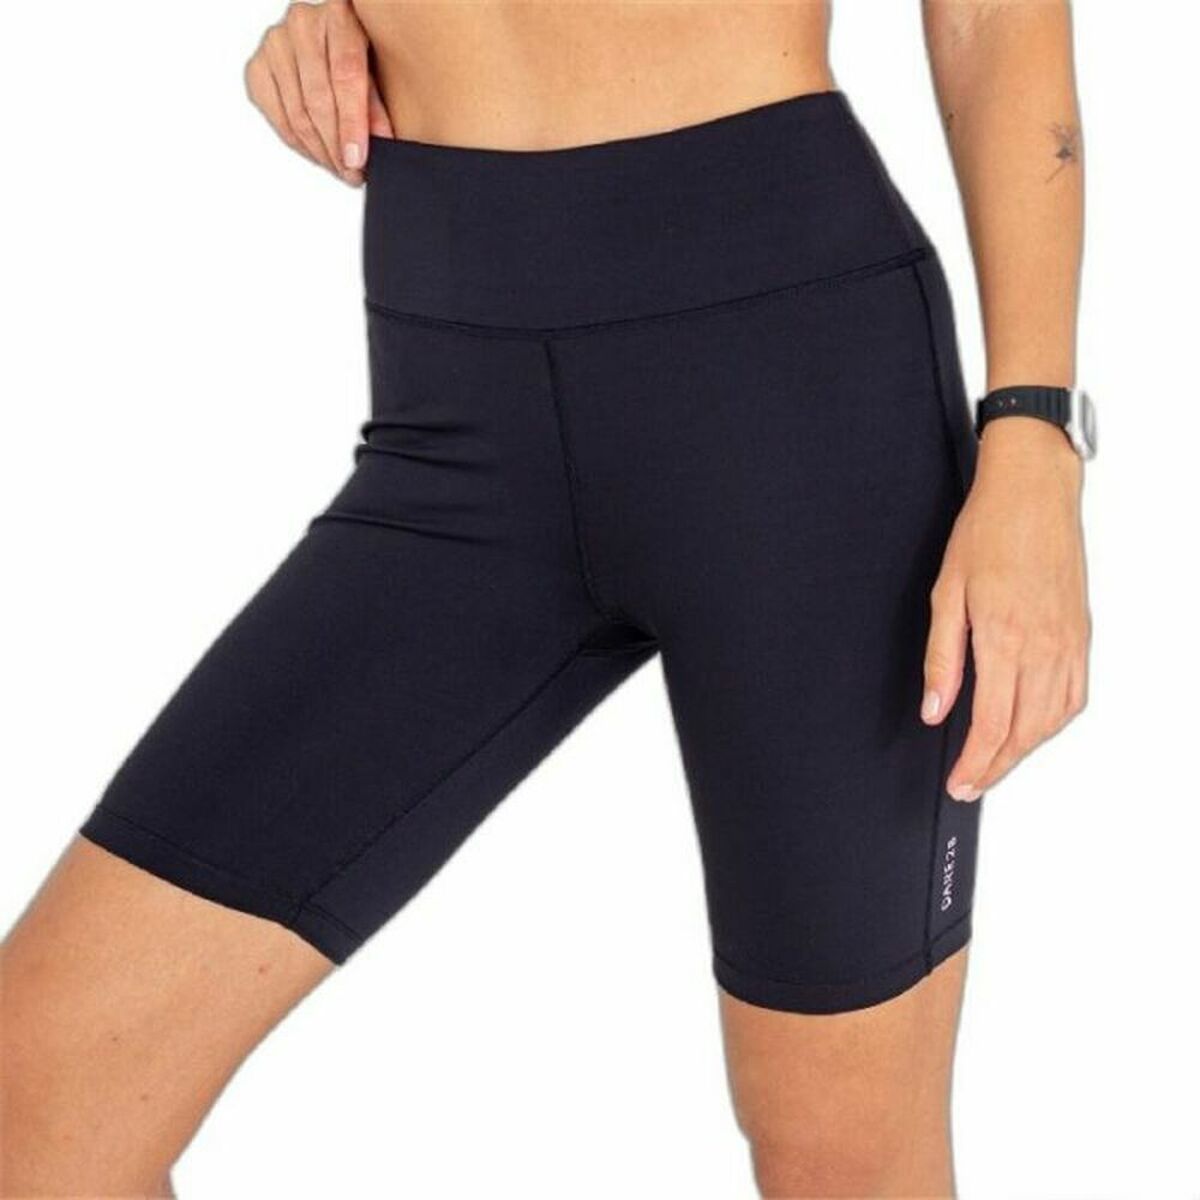 Sport leggings for Women Dare 2b Lounge About Black